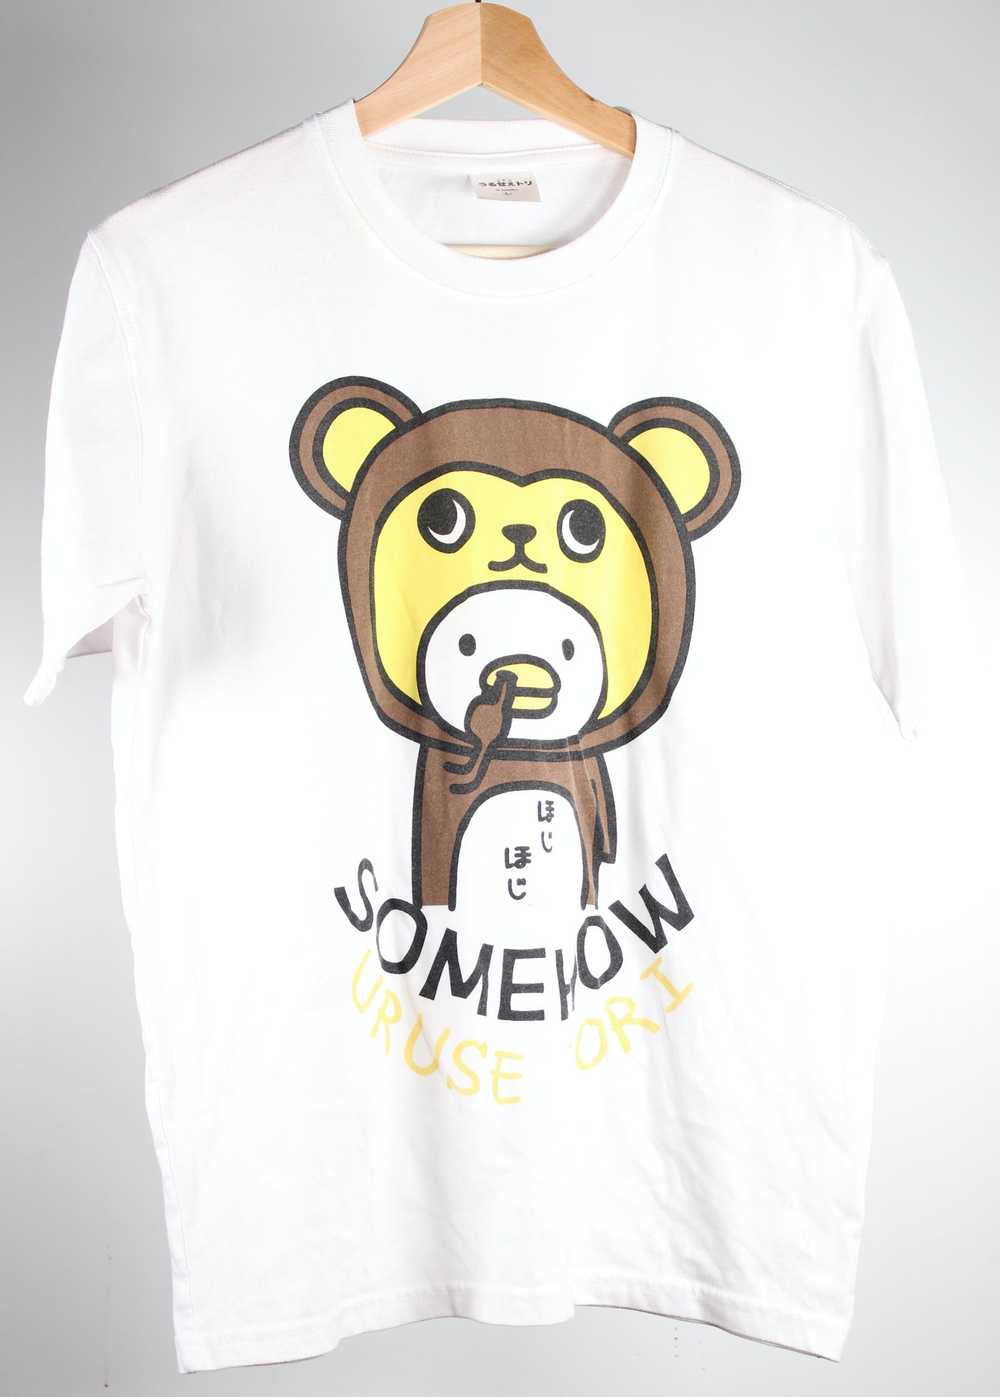 Japanese Brand Japanese Brand T Shirt - image 1